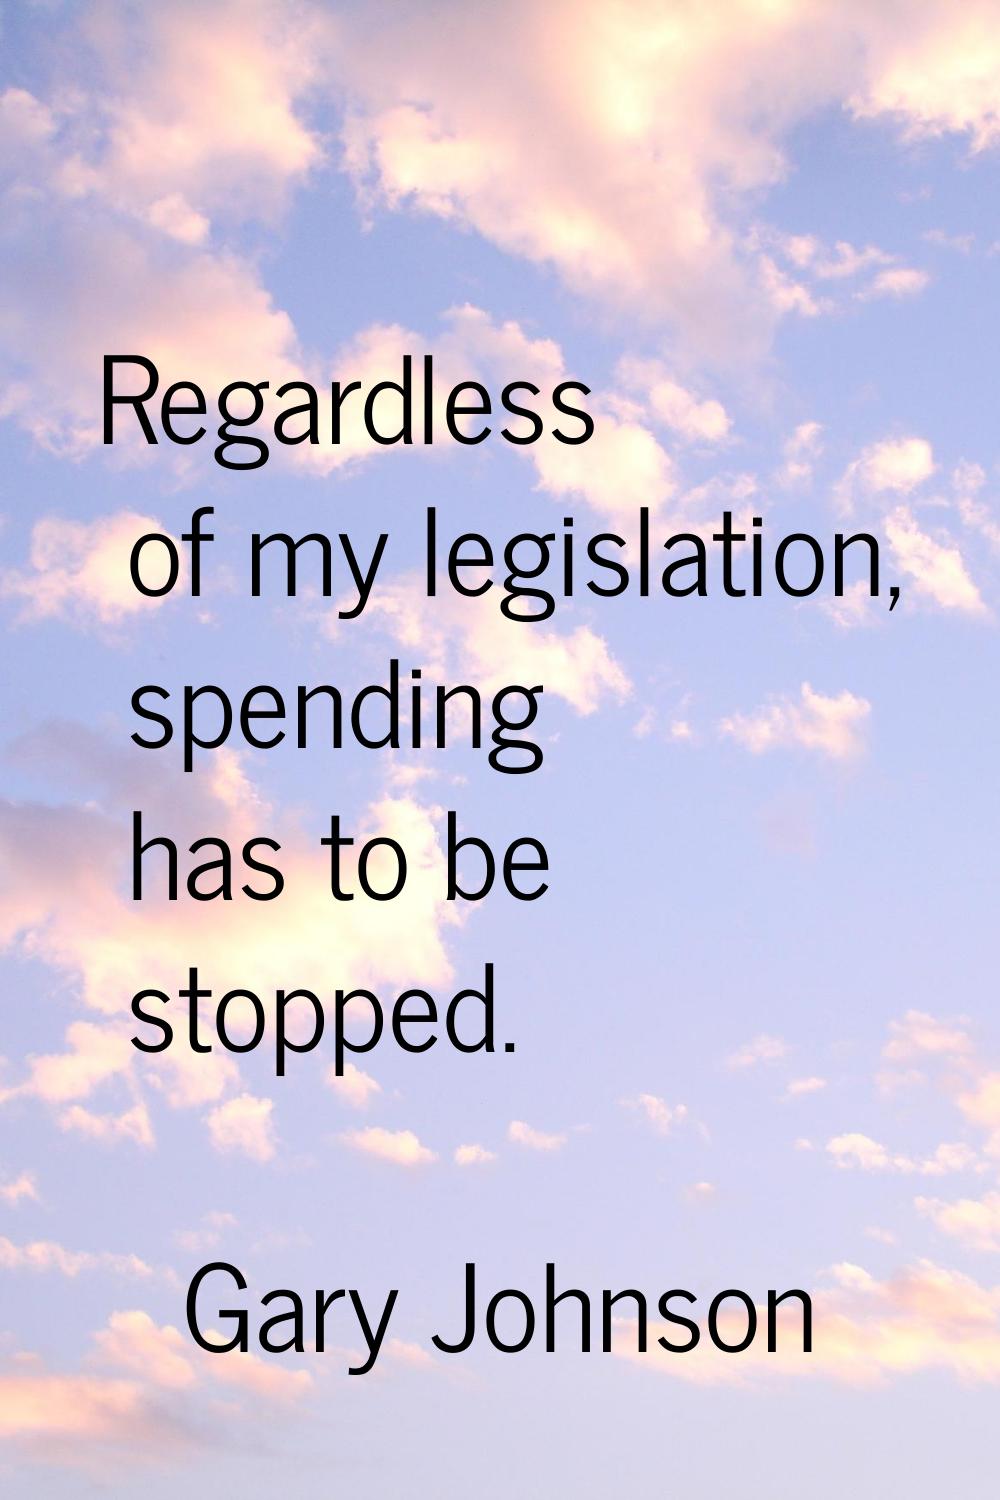 Regardless of my legislation, spending has to be stopped.